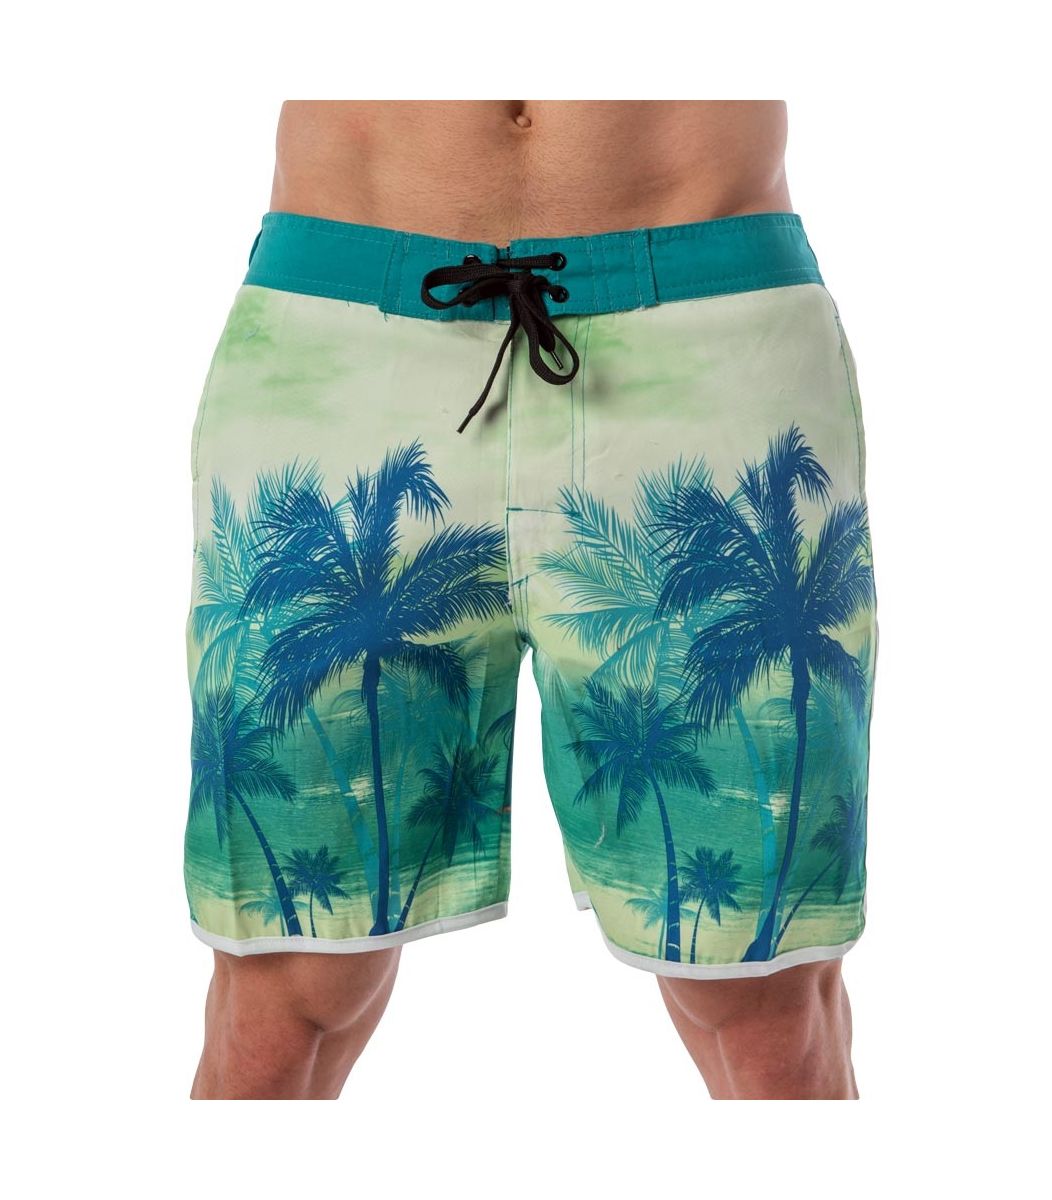 Men shorts swimwear Size Large Color Teal